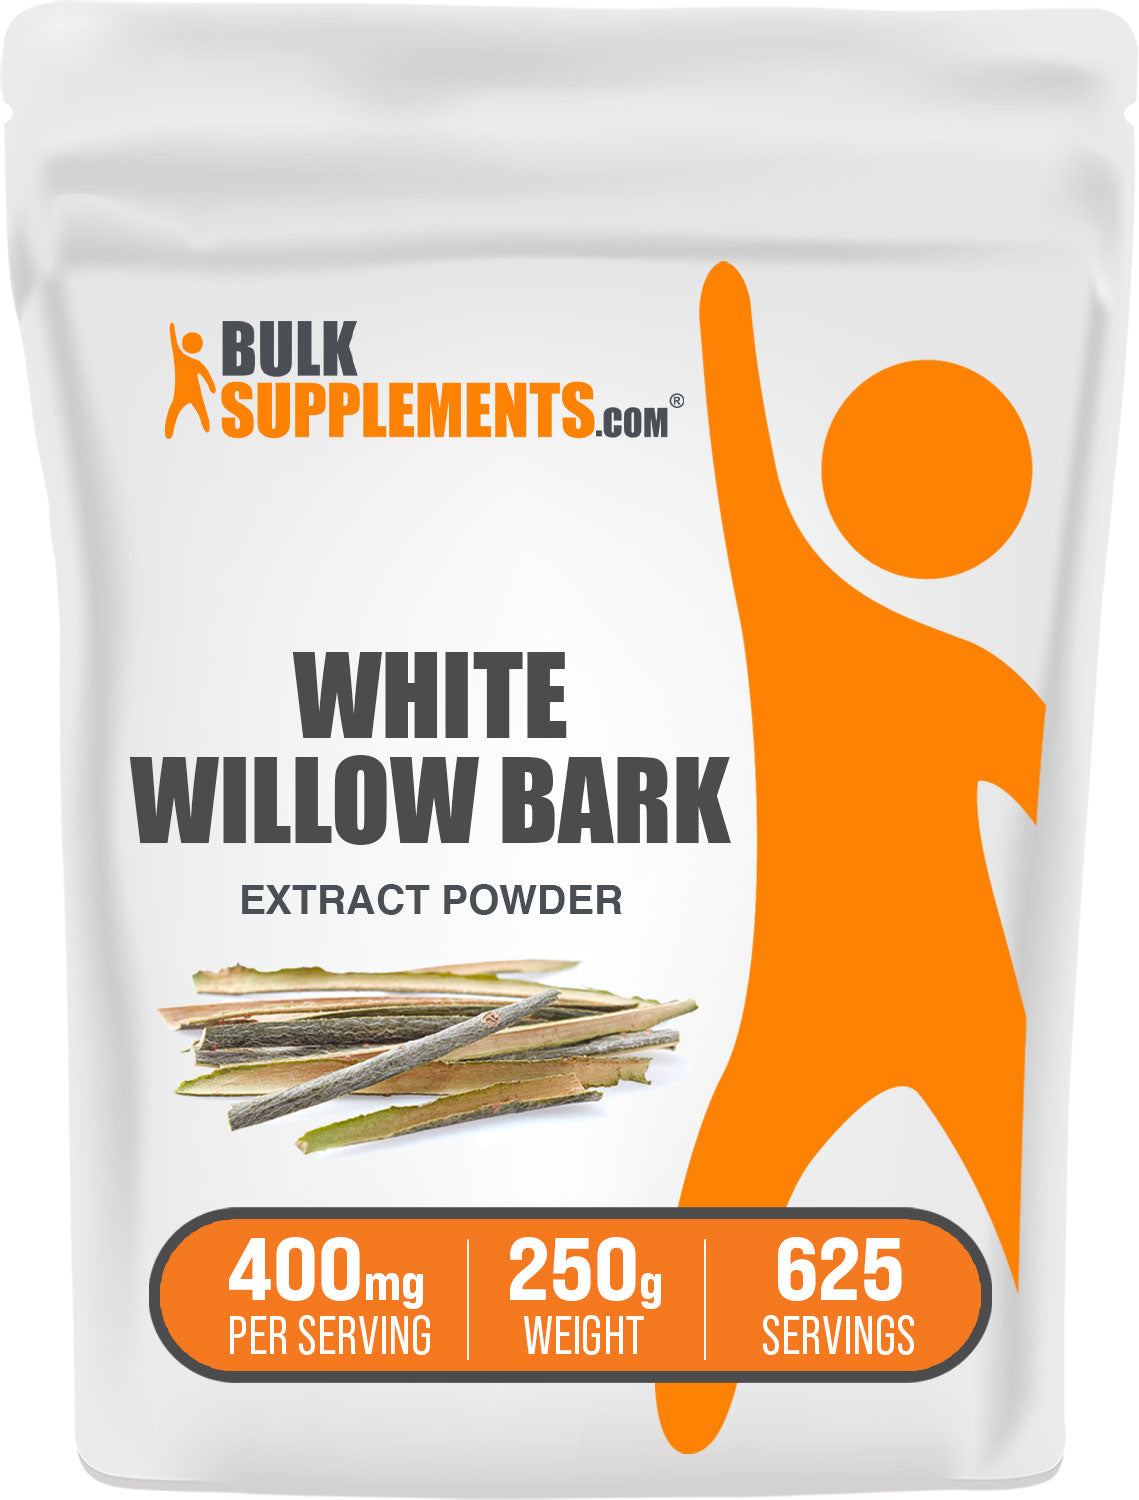 BulkSupplements.com White Willow Bark Extract Powder 250g Bag